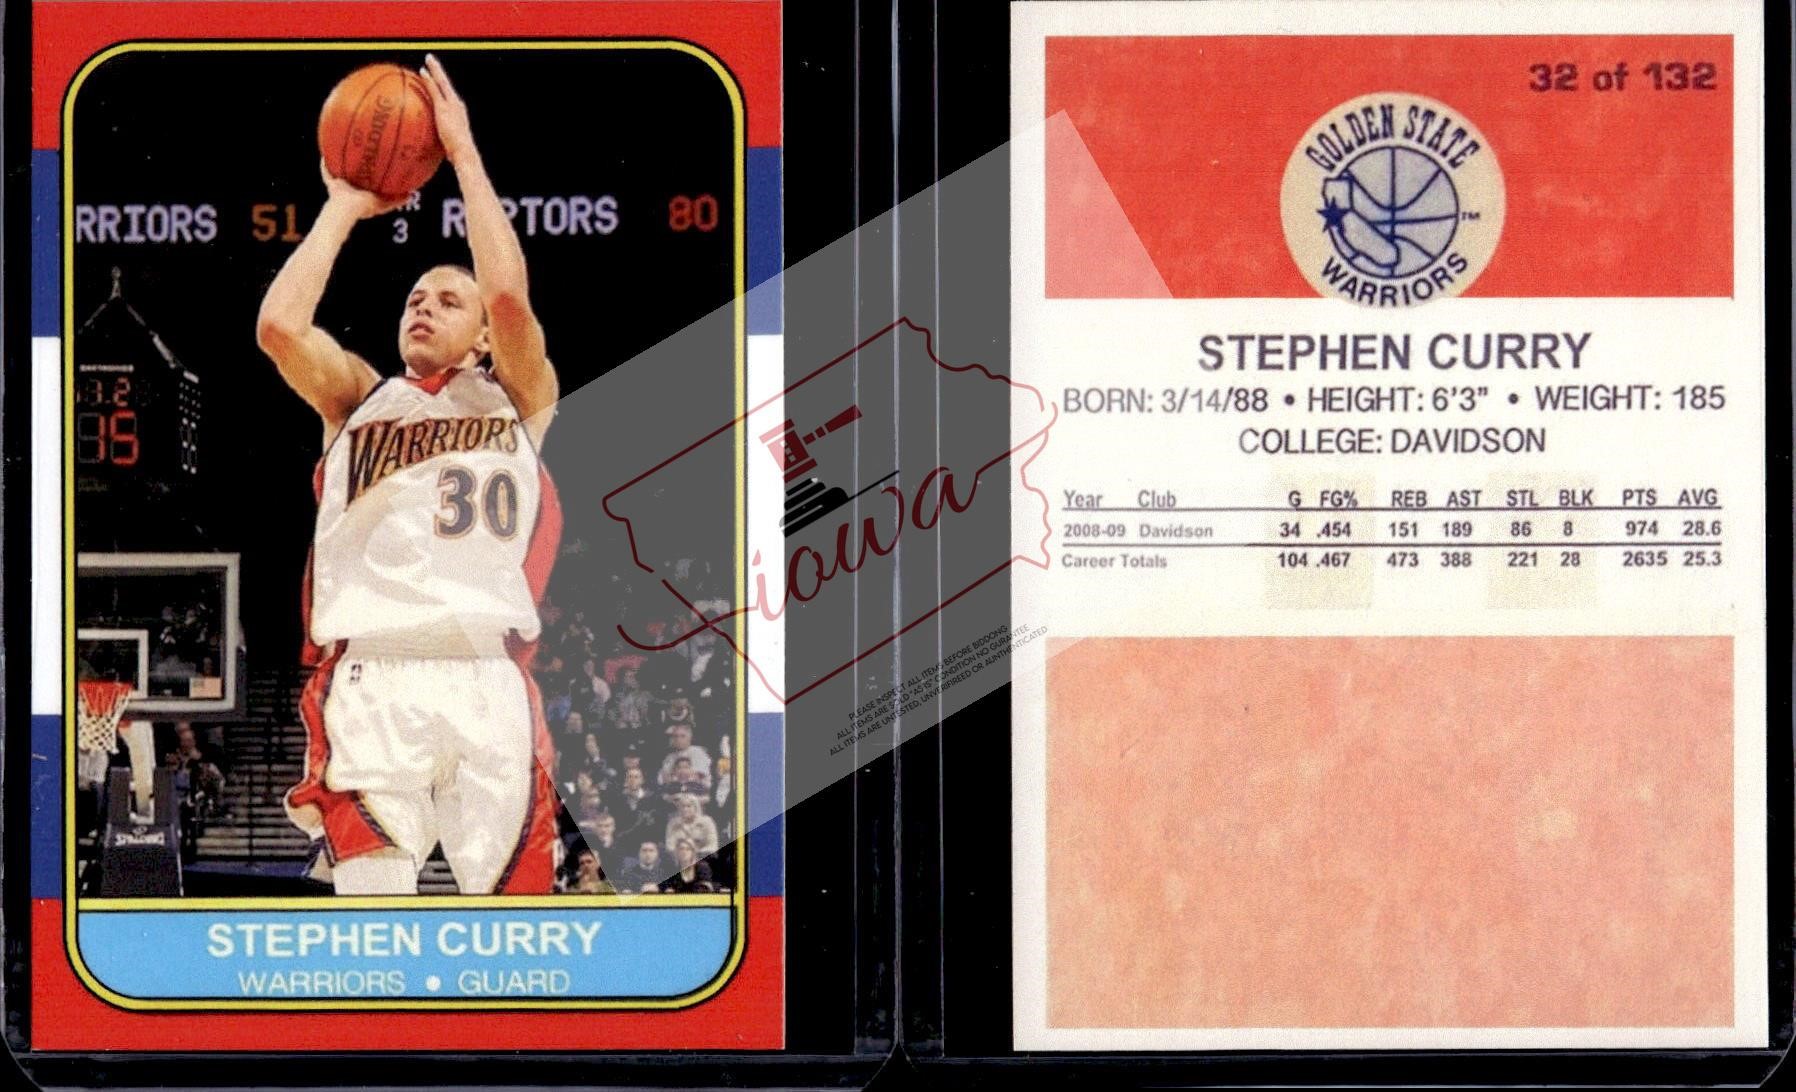 Stephen Curry 1986 Fleer style rookie card